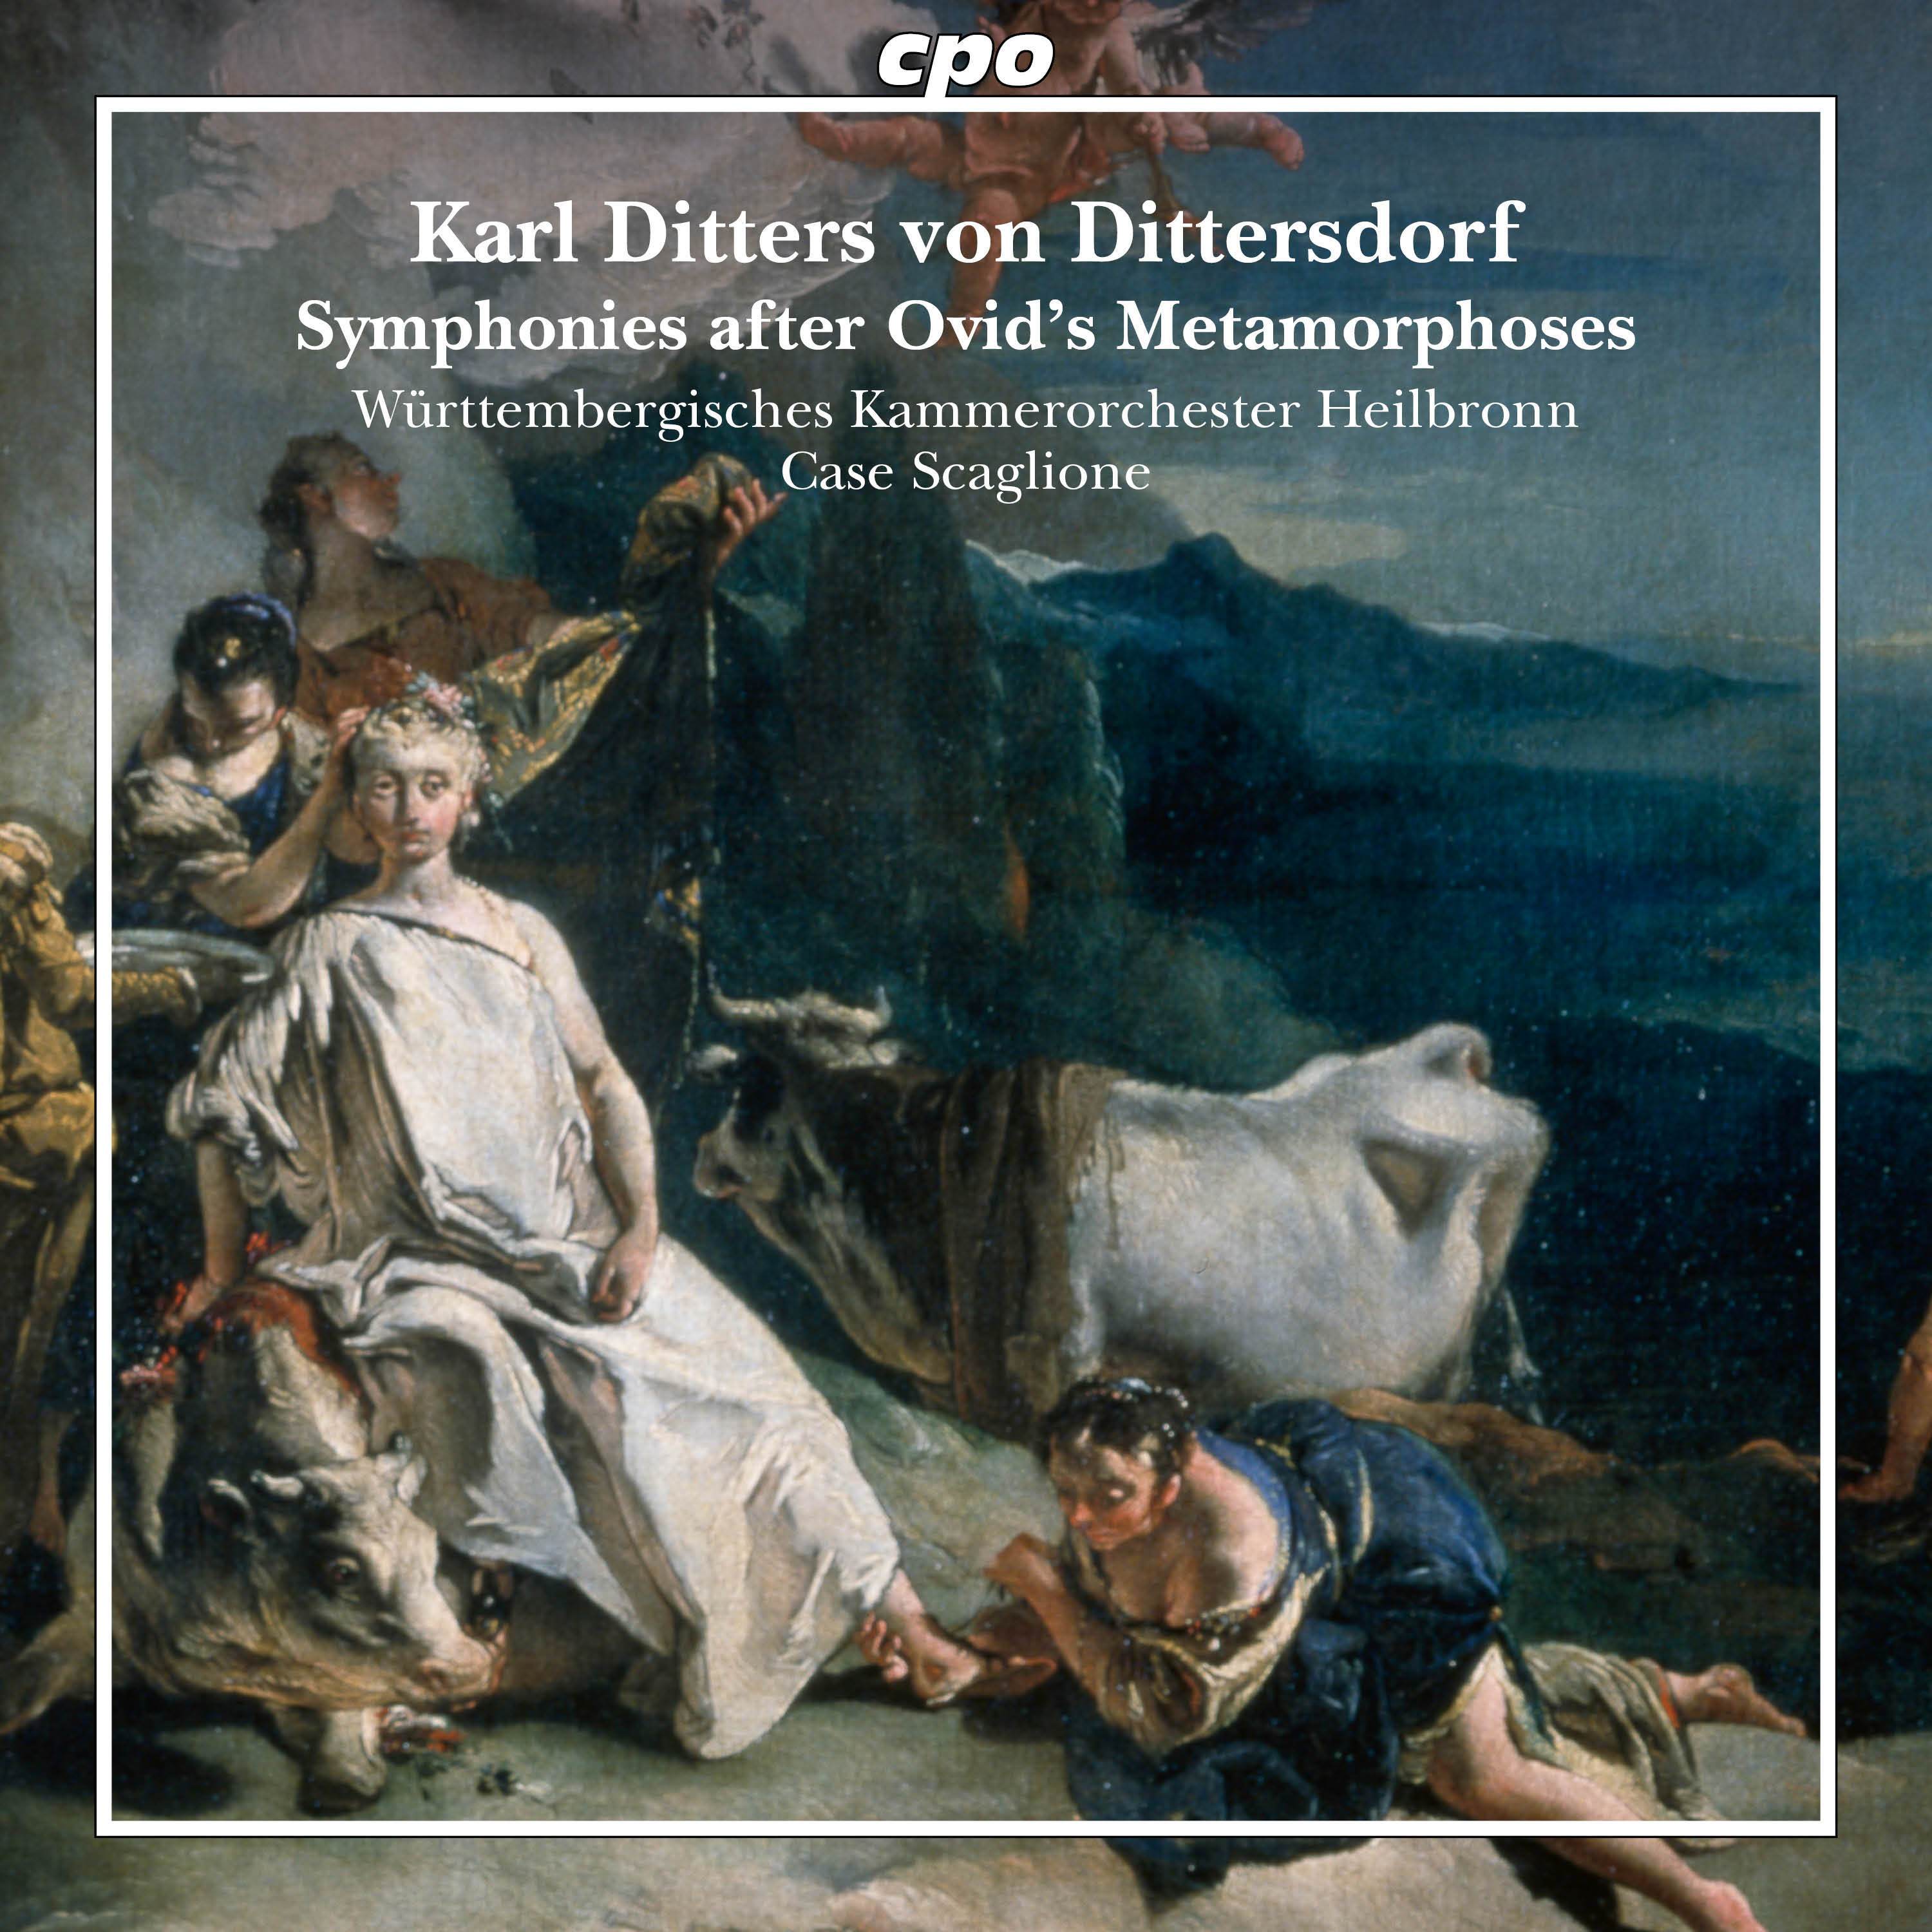 Württembergisches Kammerorchester Heilbronn - 1 Larghetto